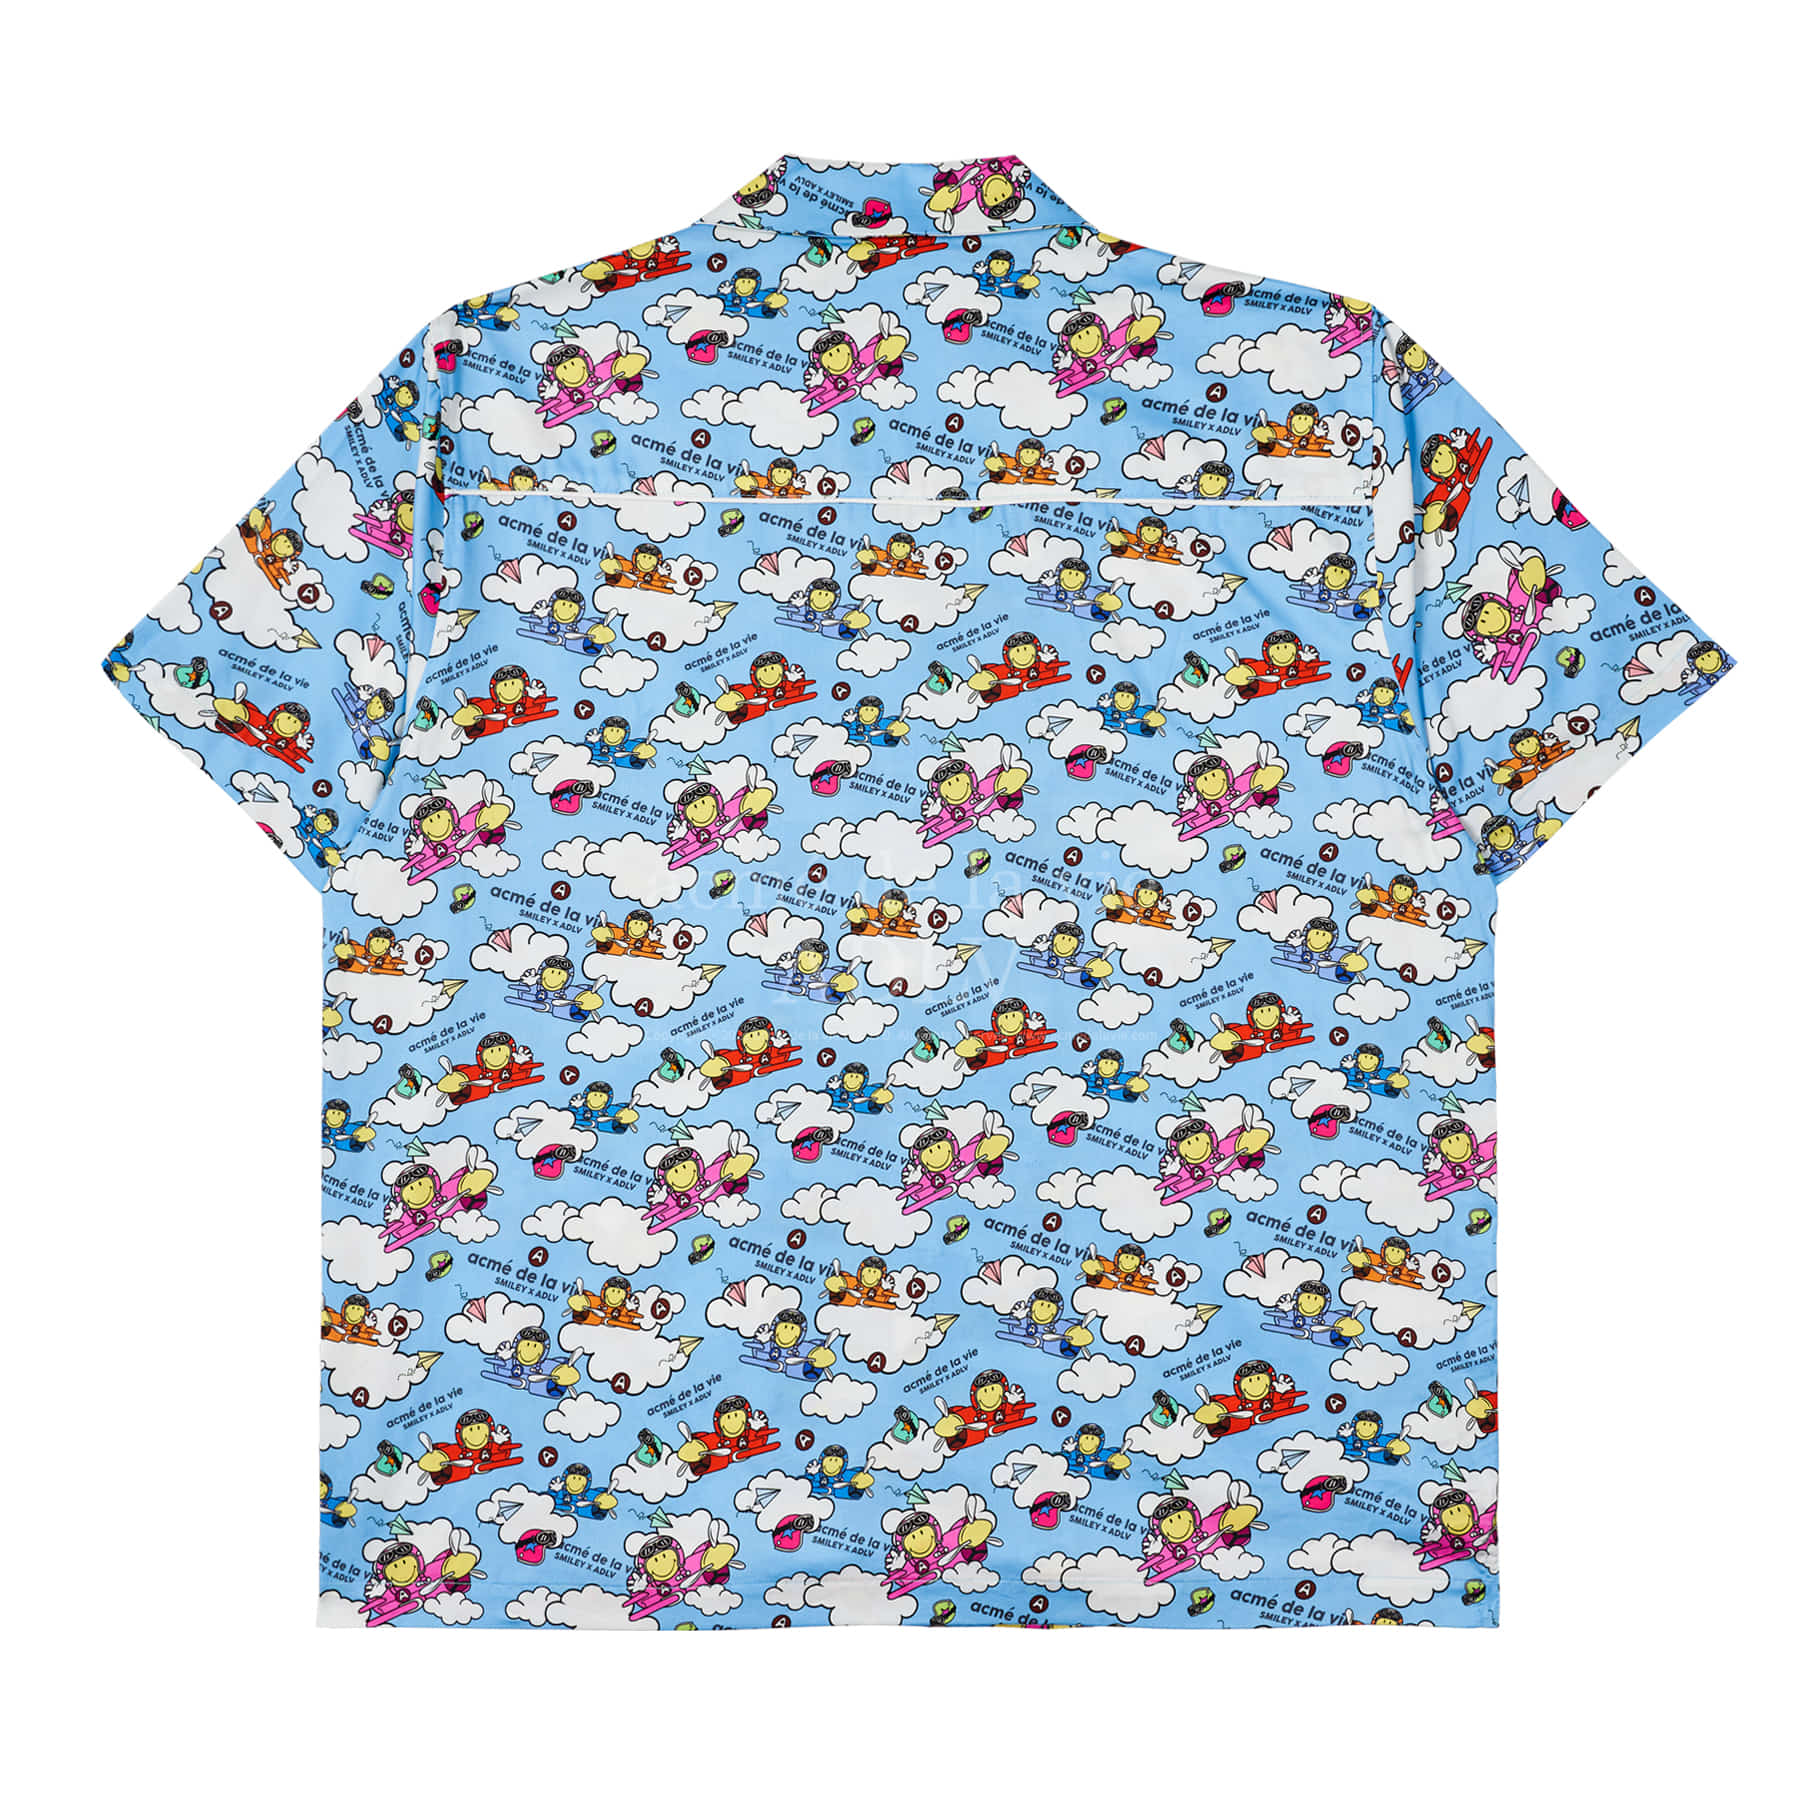 ADLV x Smiley - Airplane Artwork Pattern Short Sleeve Shirt